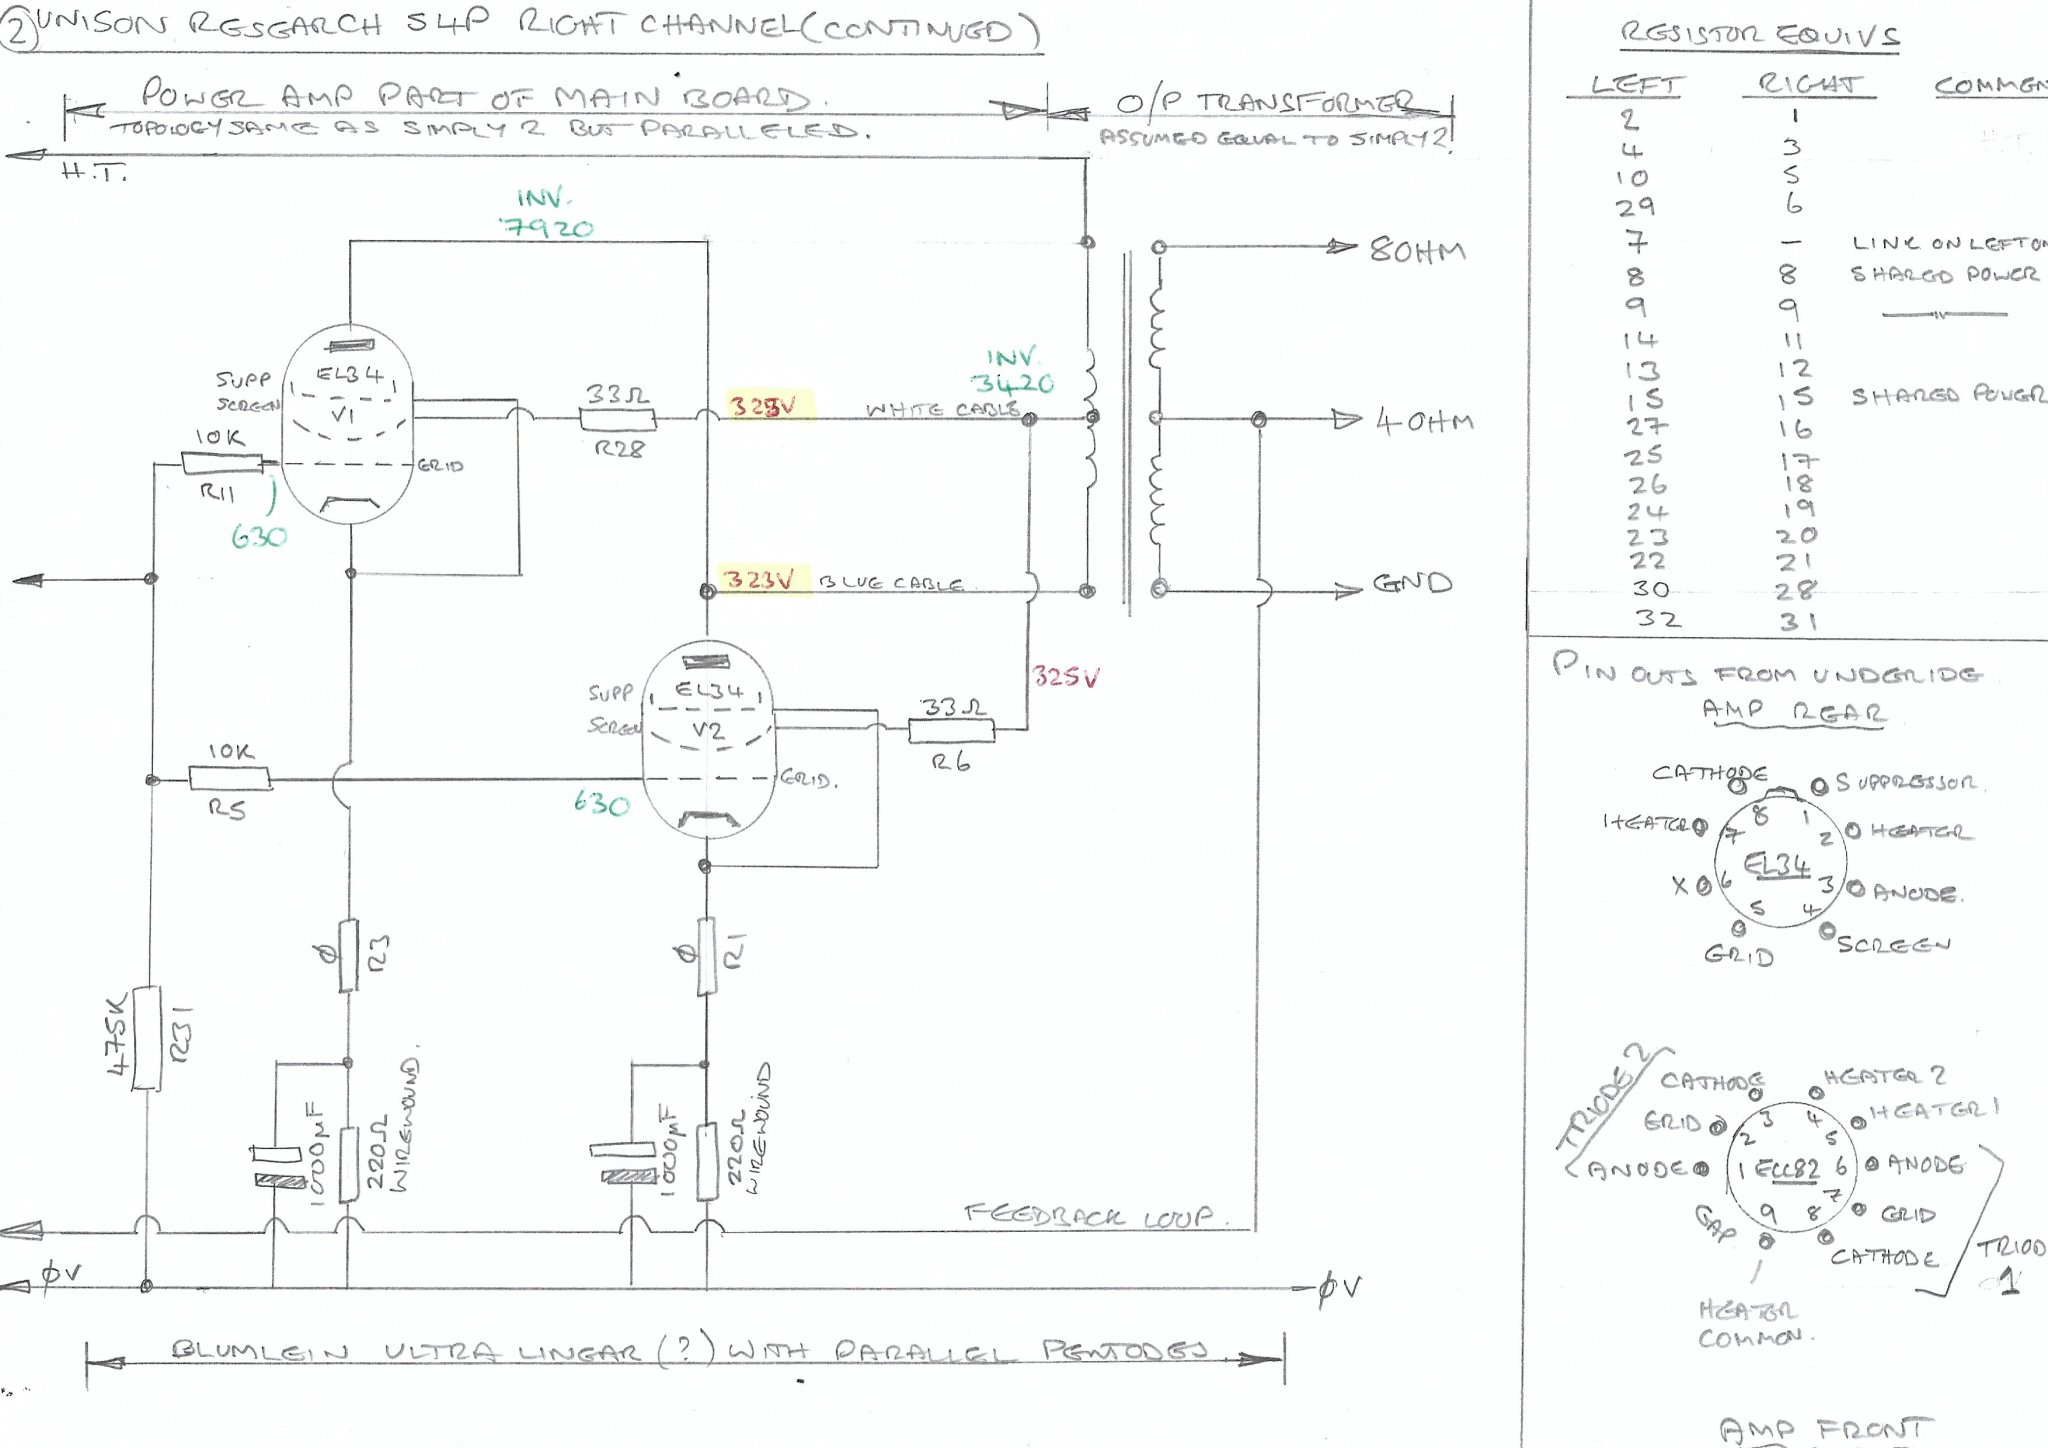 Unison Research S4P schematic 2 of 2.jpg